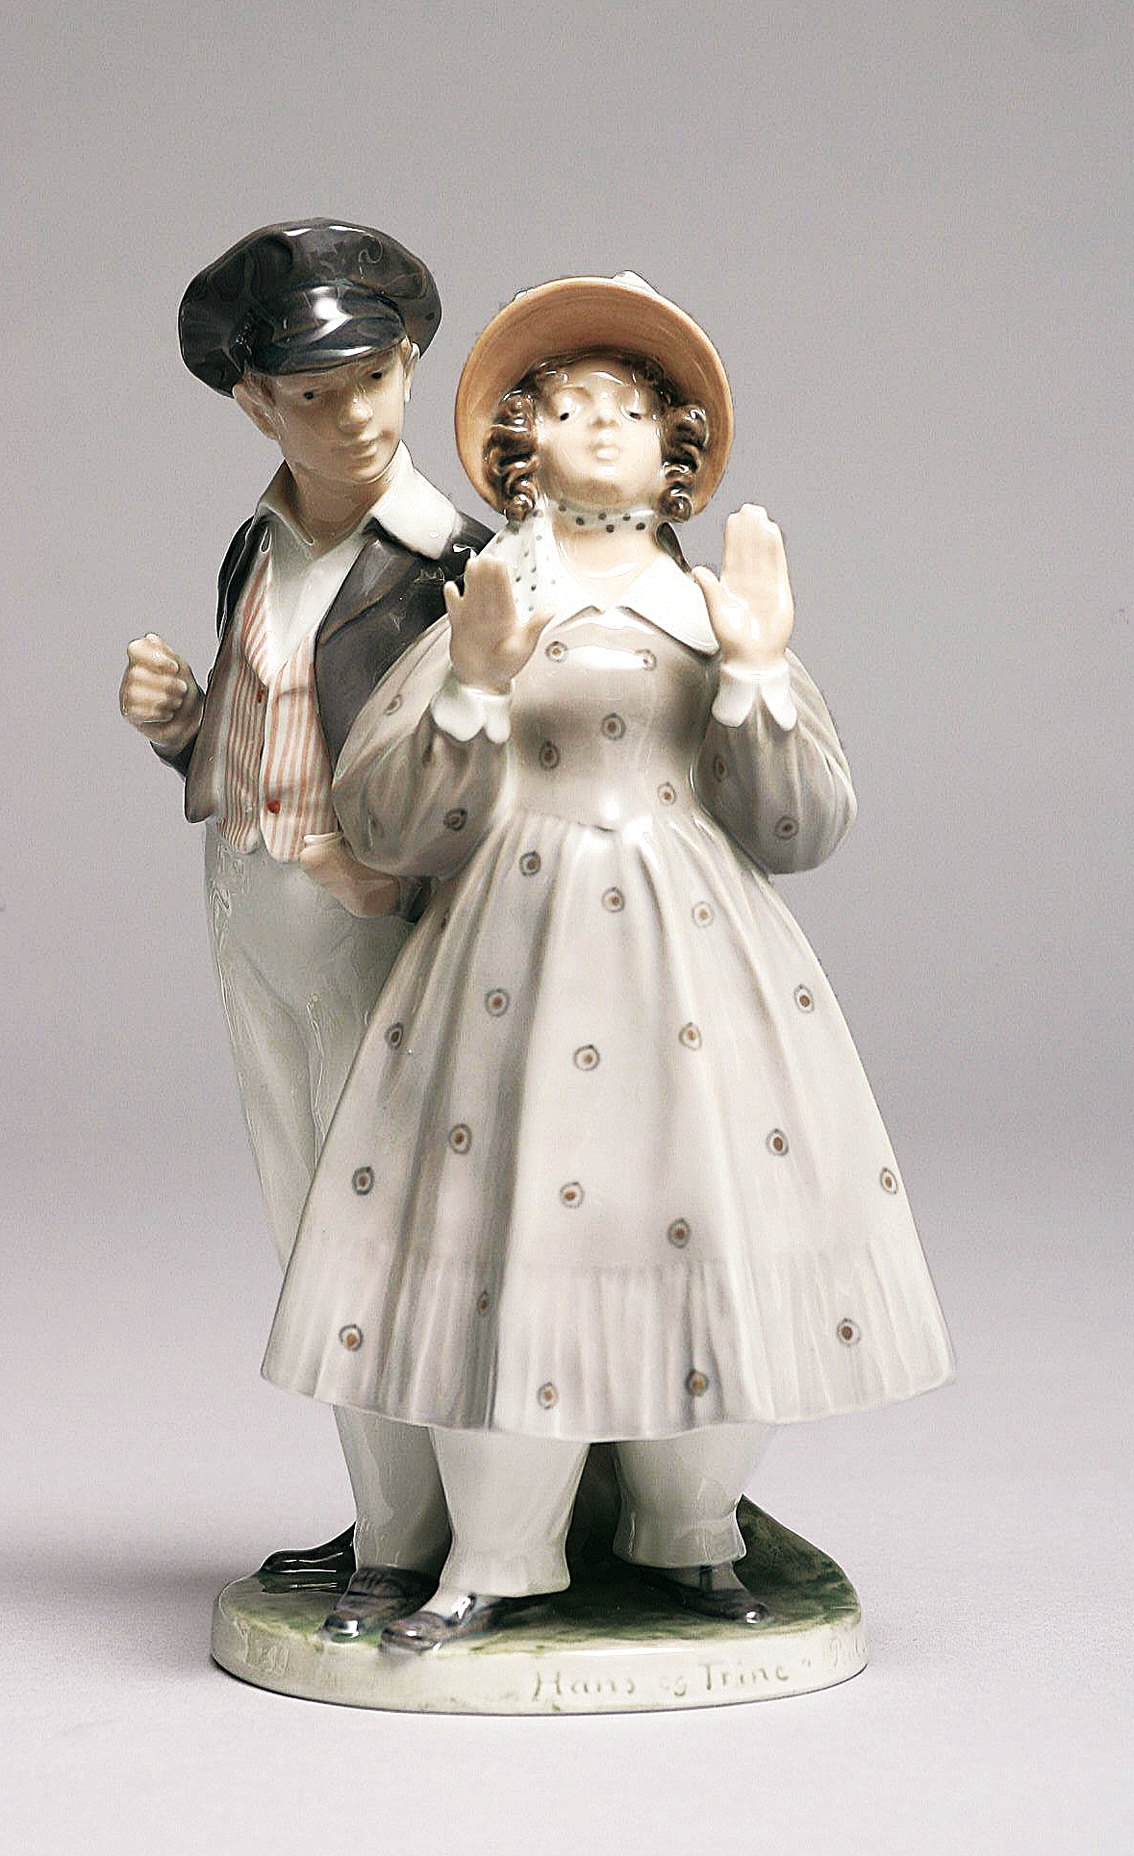 A pair of figures 'Hans og Trine'